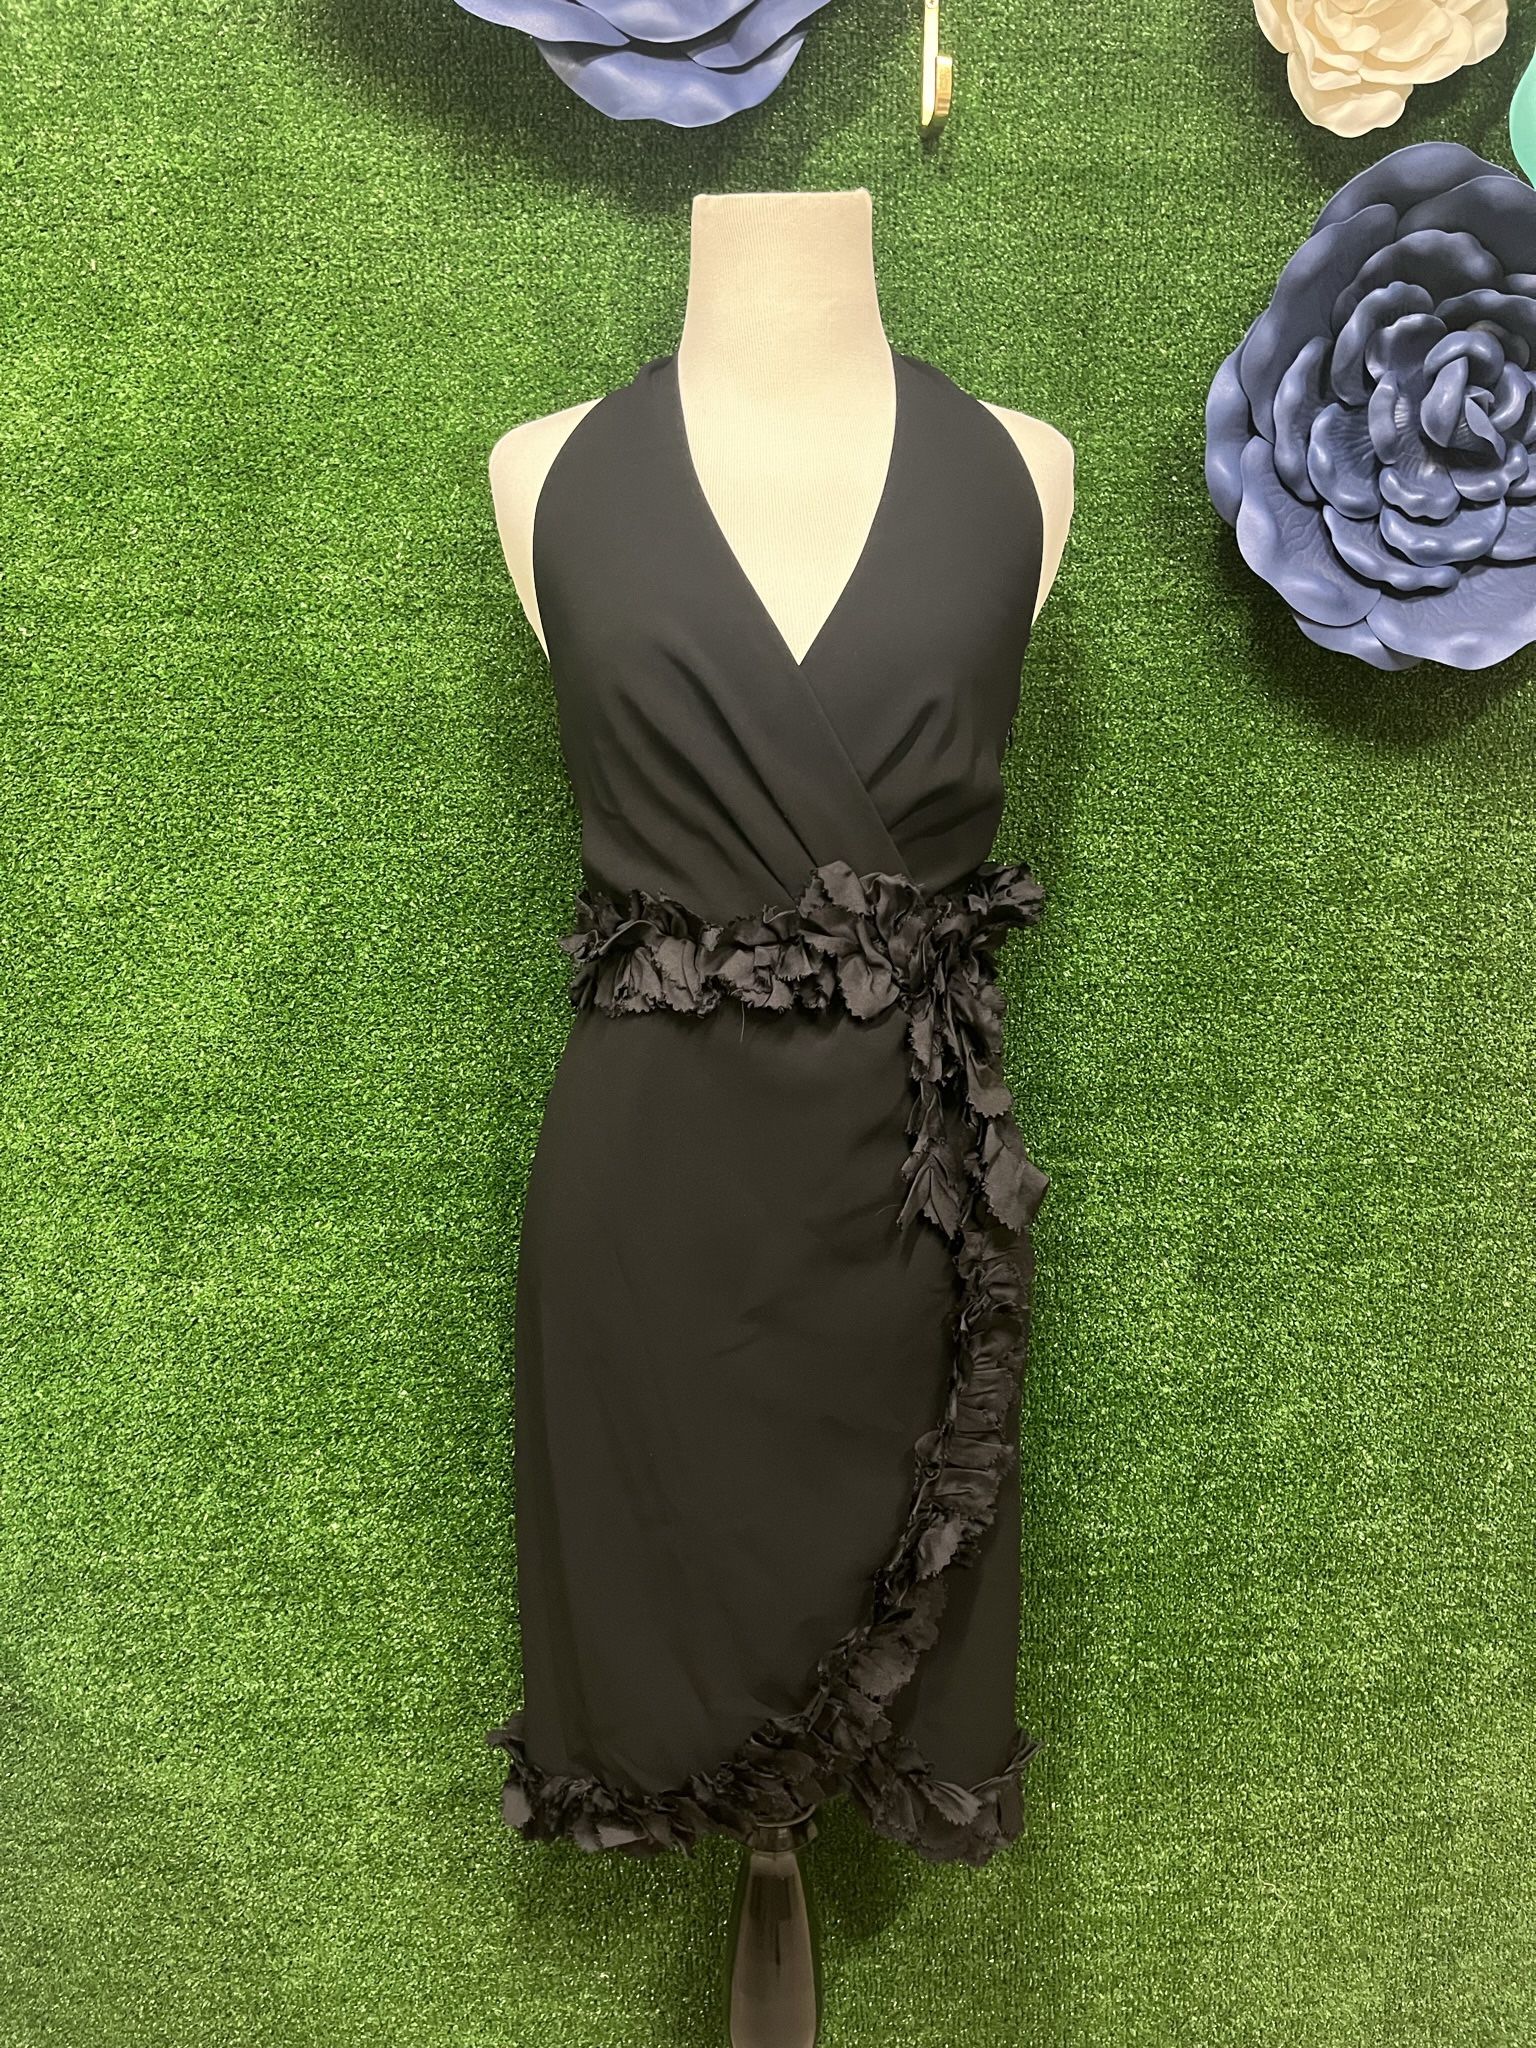 Moschino Black Halter Top Dress Size 6 